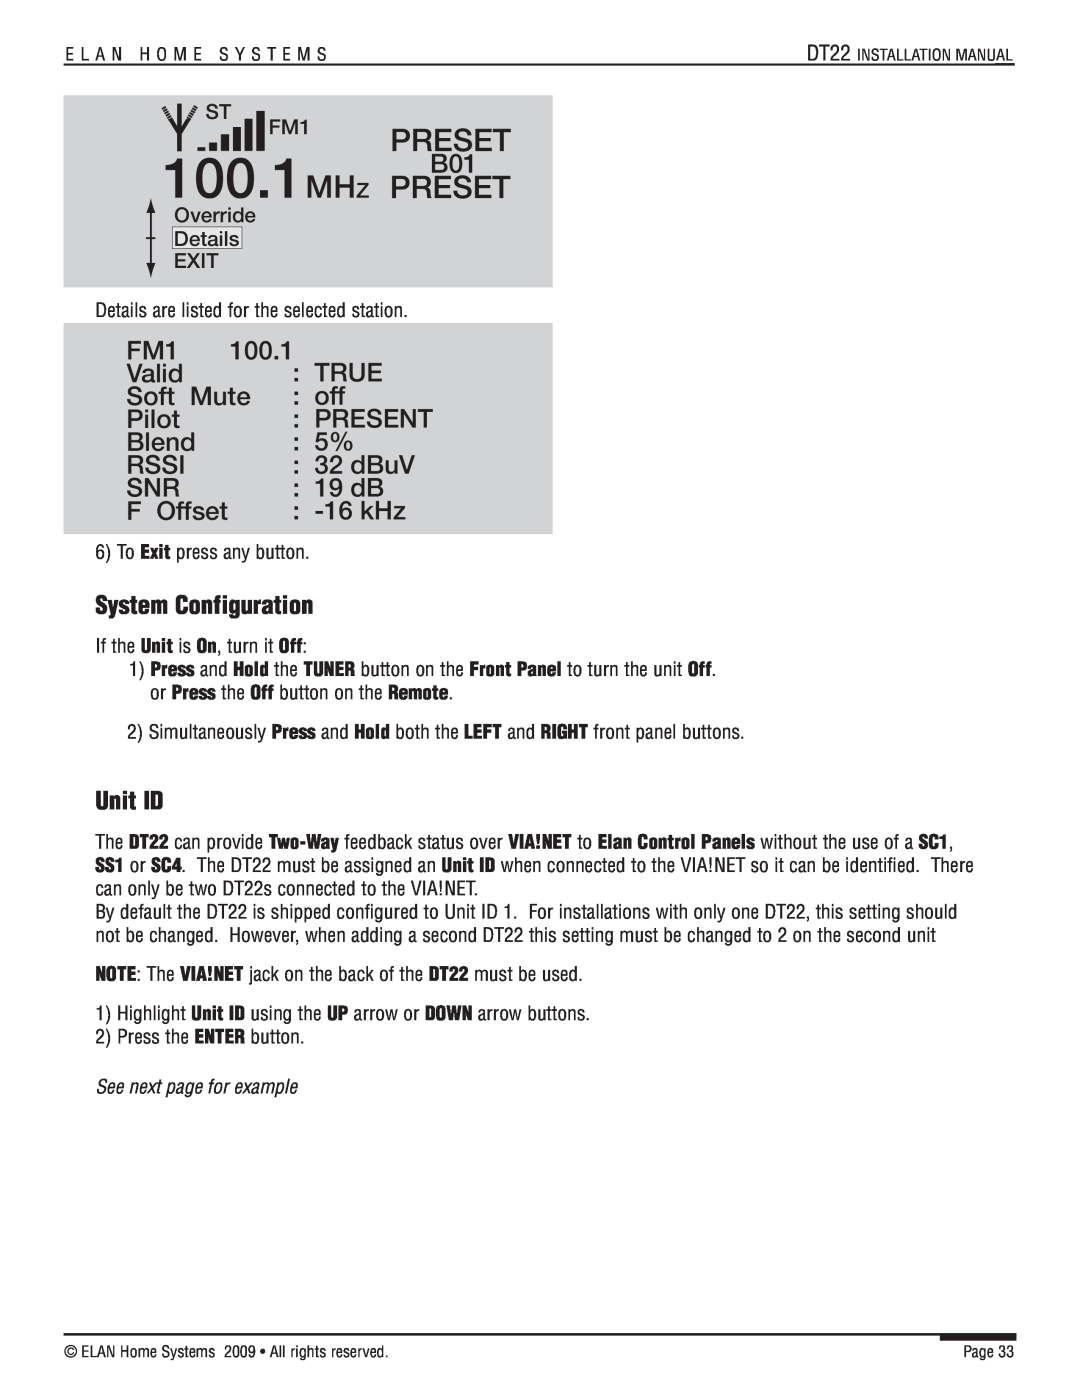 ELAN Home Systems DT22 manual Valid, 100.1MHZ PRESET, Preset 